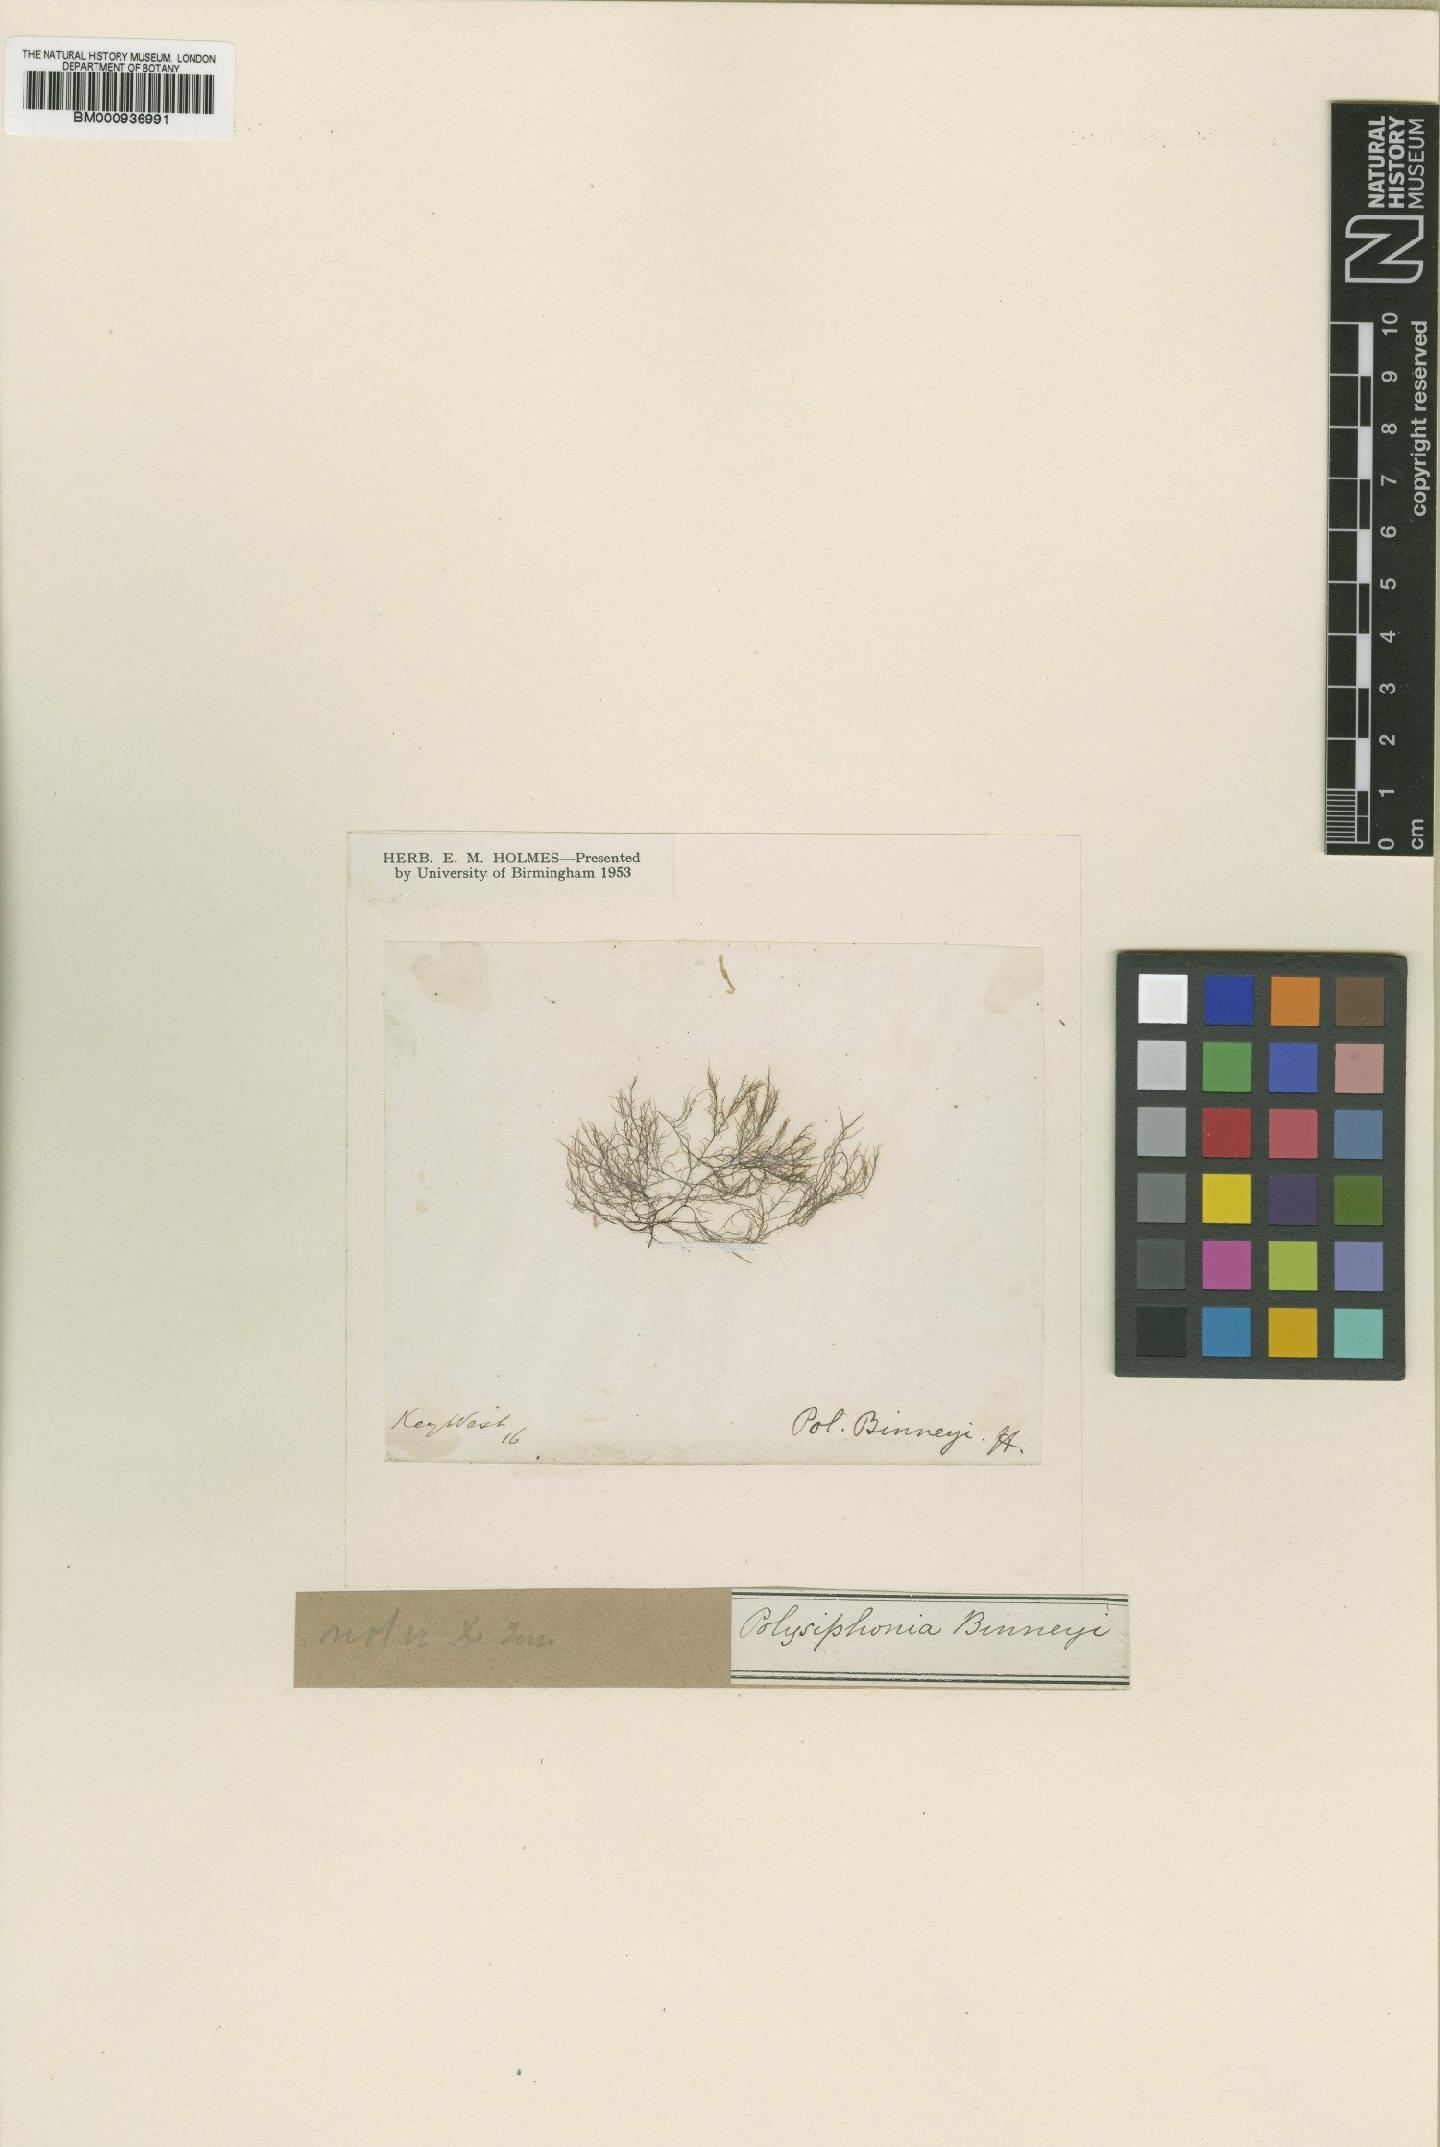 To NHMUK collection (Polysiphonia binneyi Harv.; Syntype; NHMUK:ecatalogue:480145)